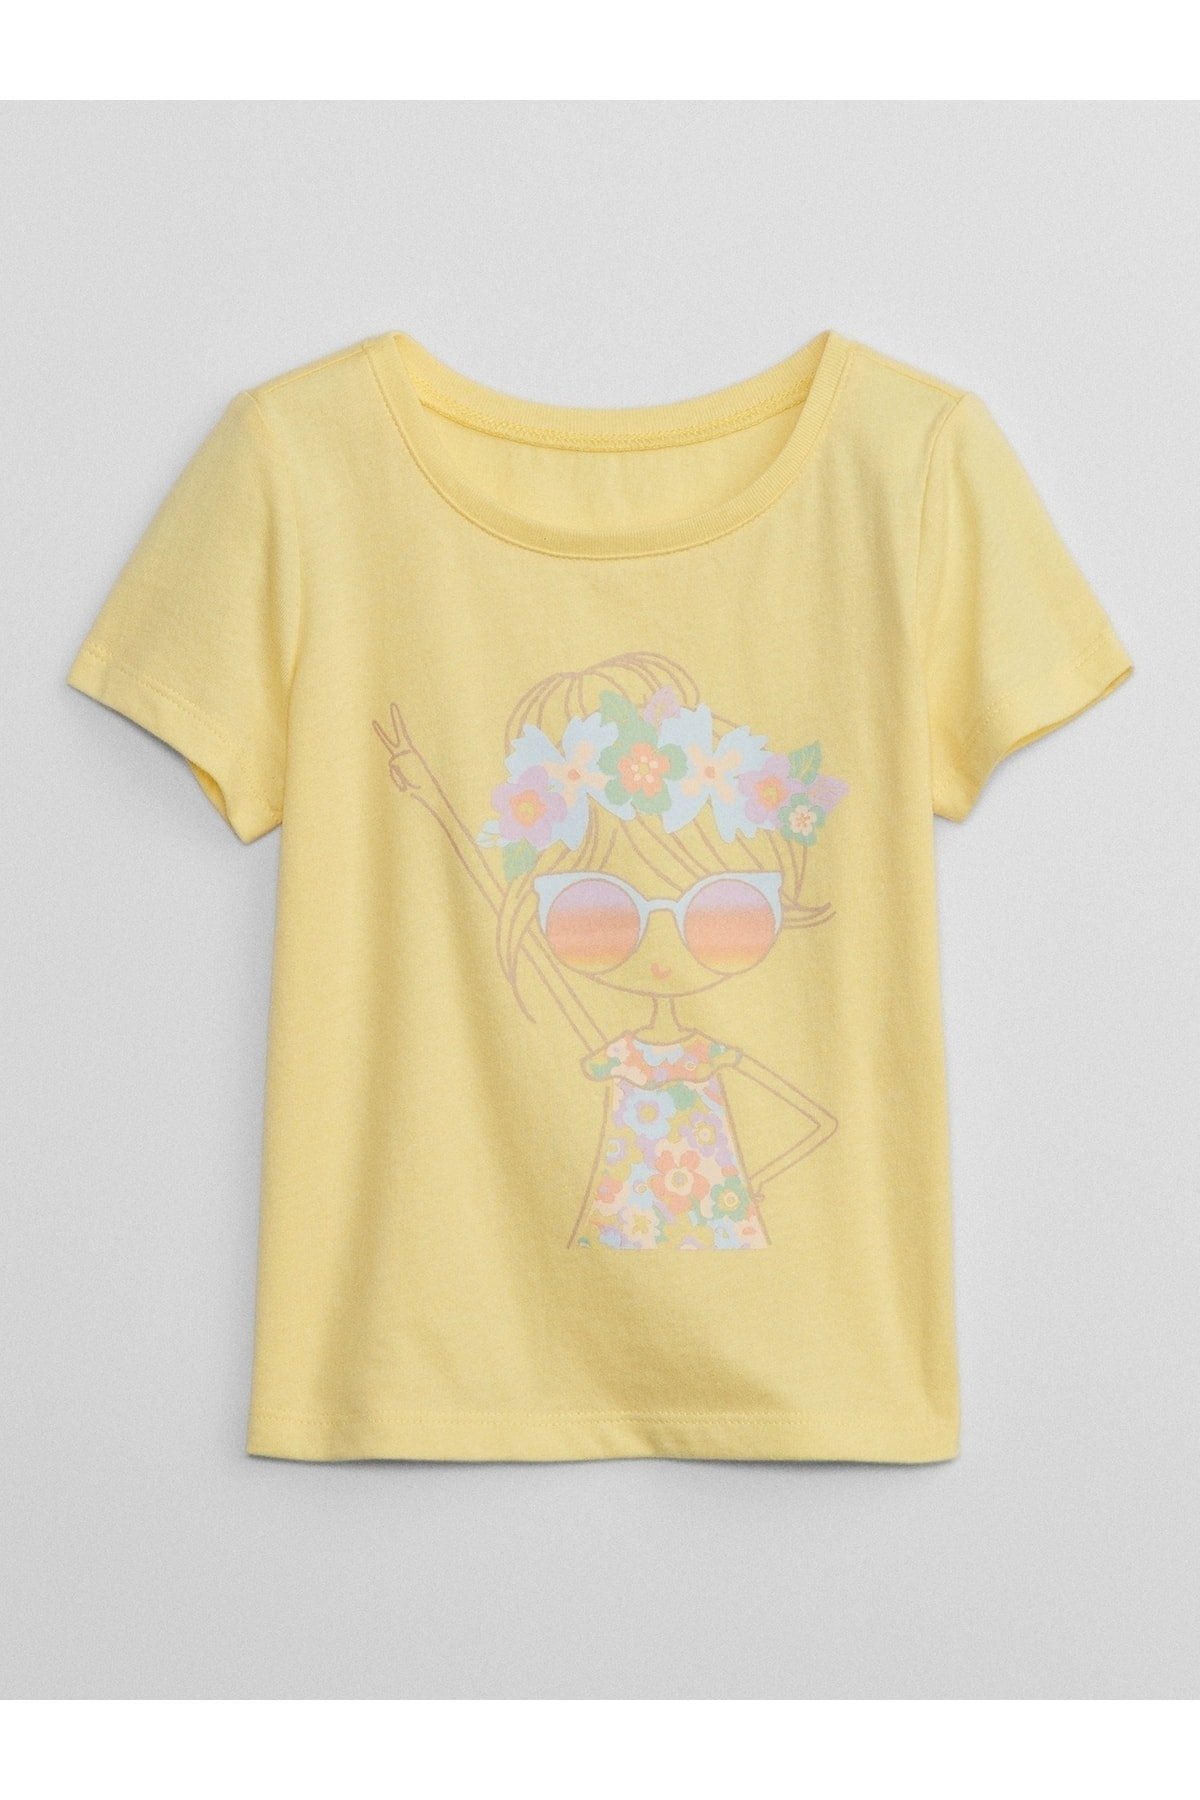 تیشرت دختر بچه با چاپ گرافیکی زرد